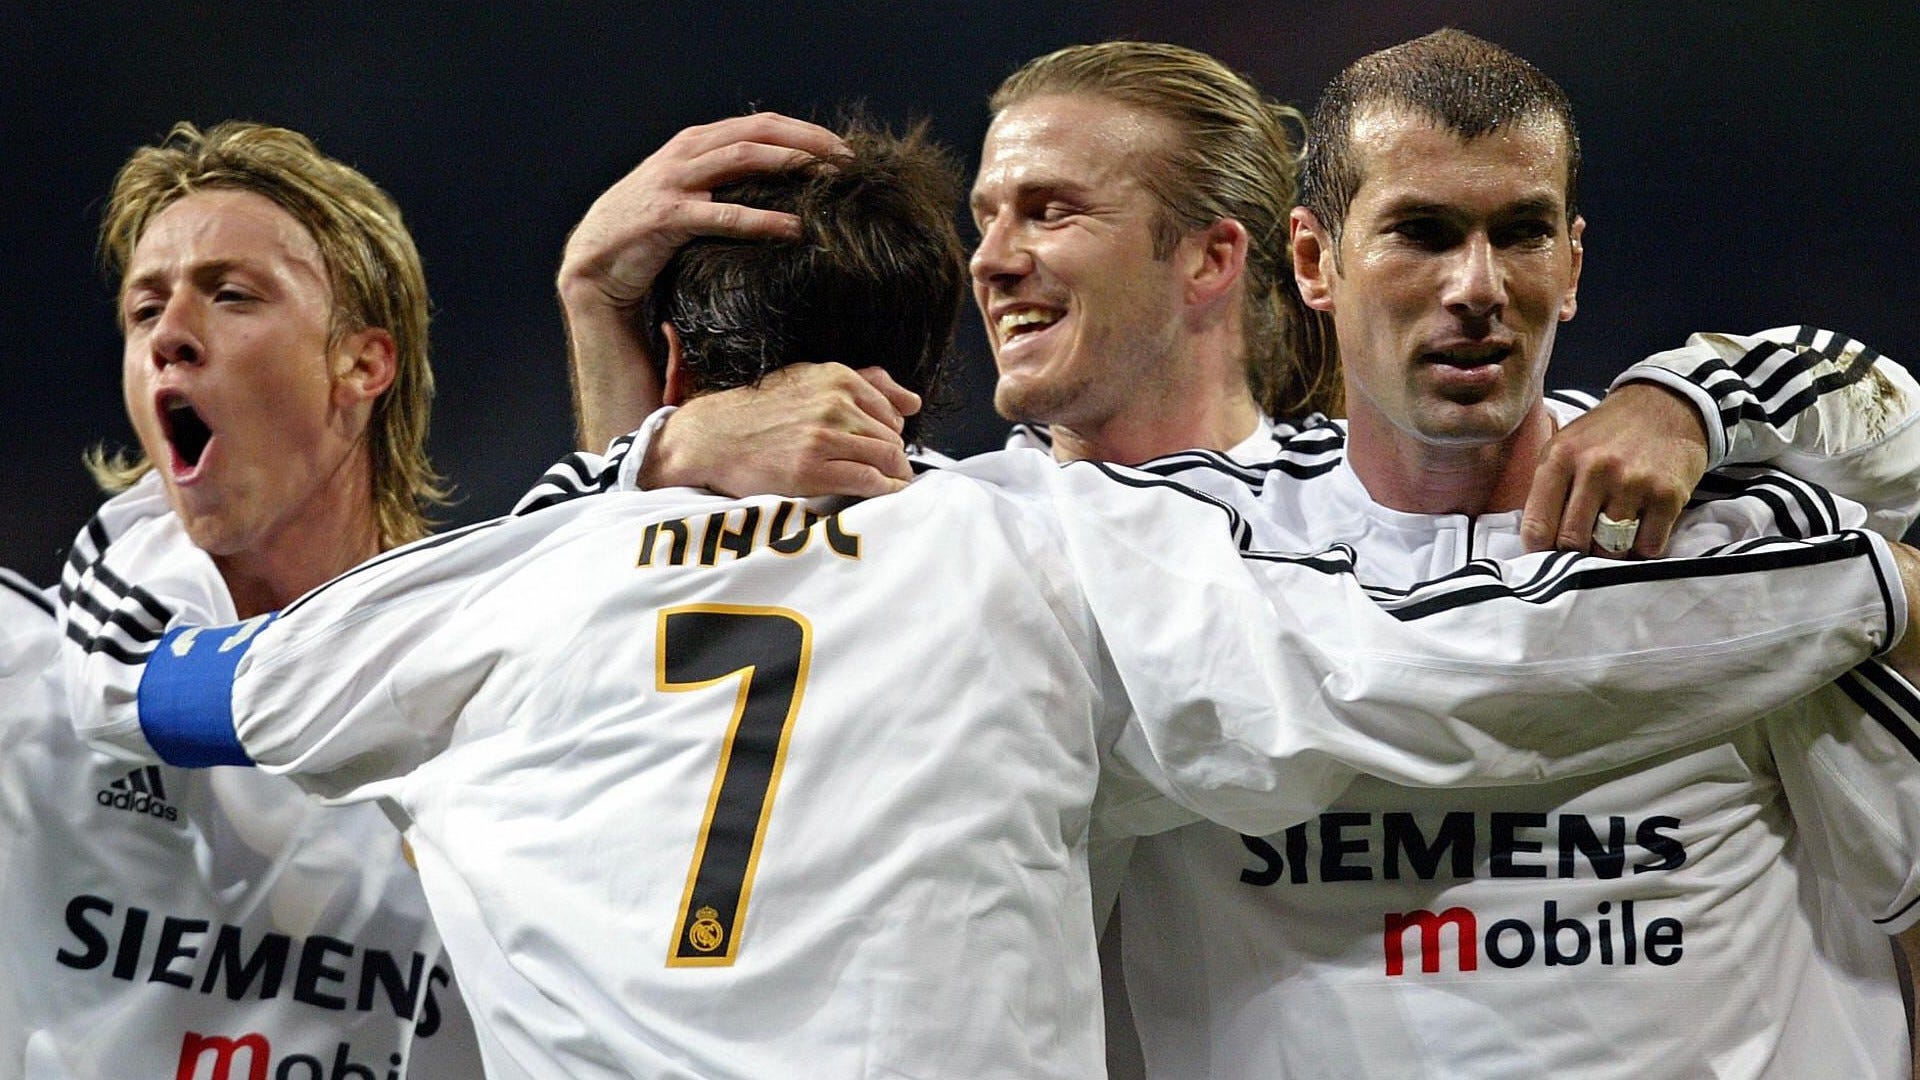 Beckham, Ronaldo, Zidane - Who were the best Galacticos? Ex-Real Madrid coach picks brightest stars in Blancos galaxy